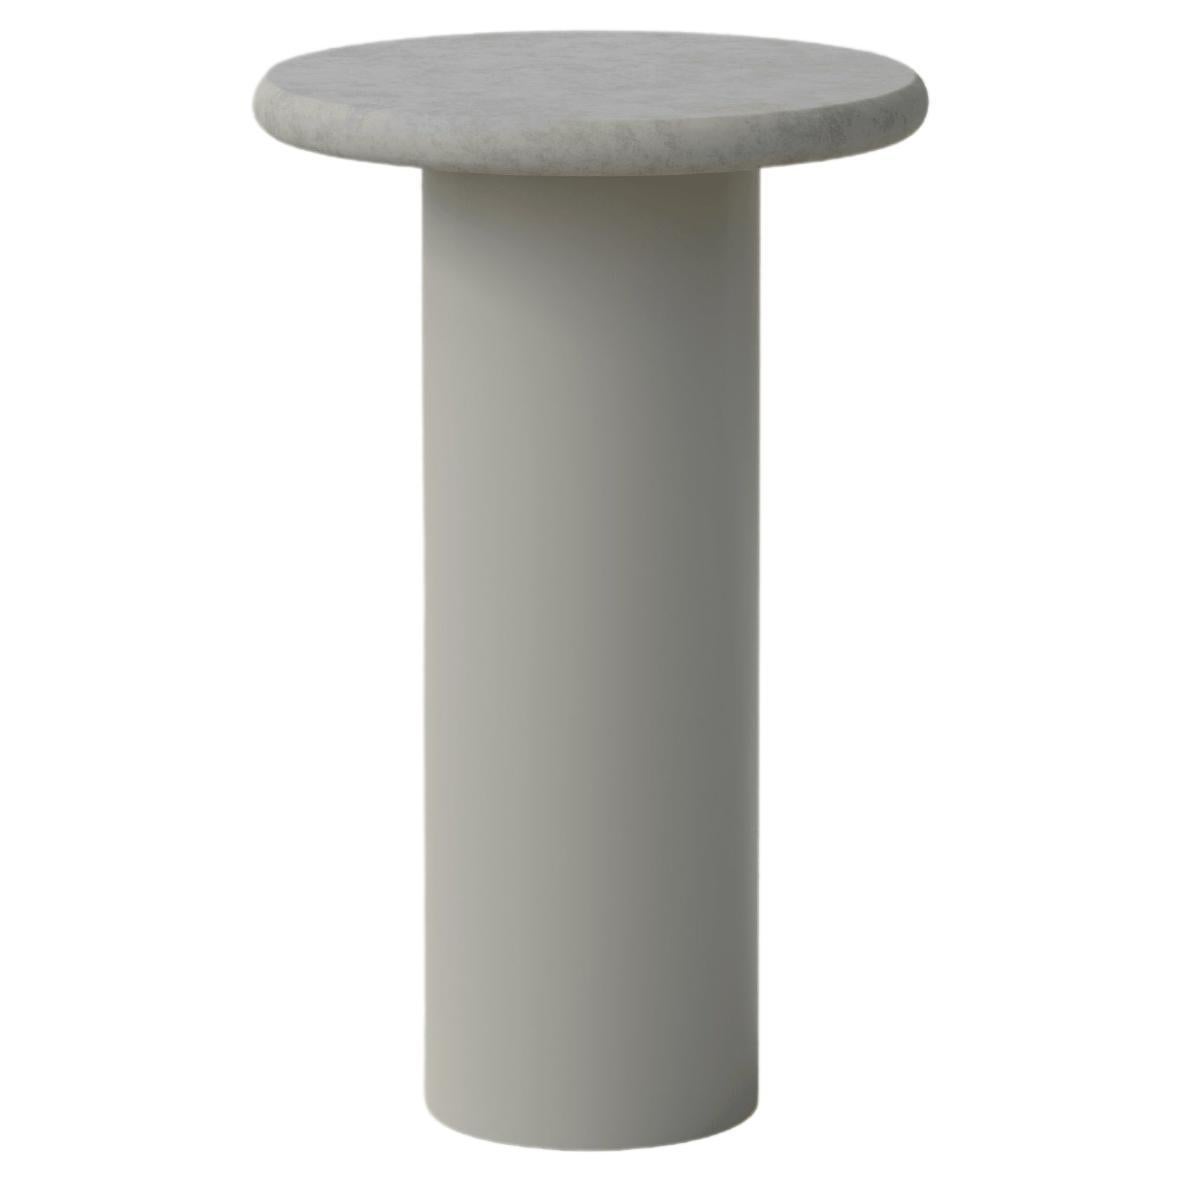 Raindrop Coffee Table, 300, Microcrete / Pebble Grey For Sale